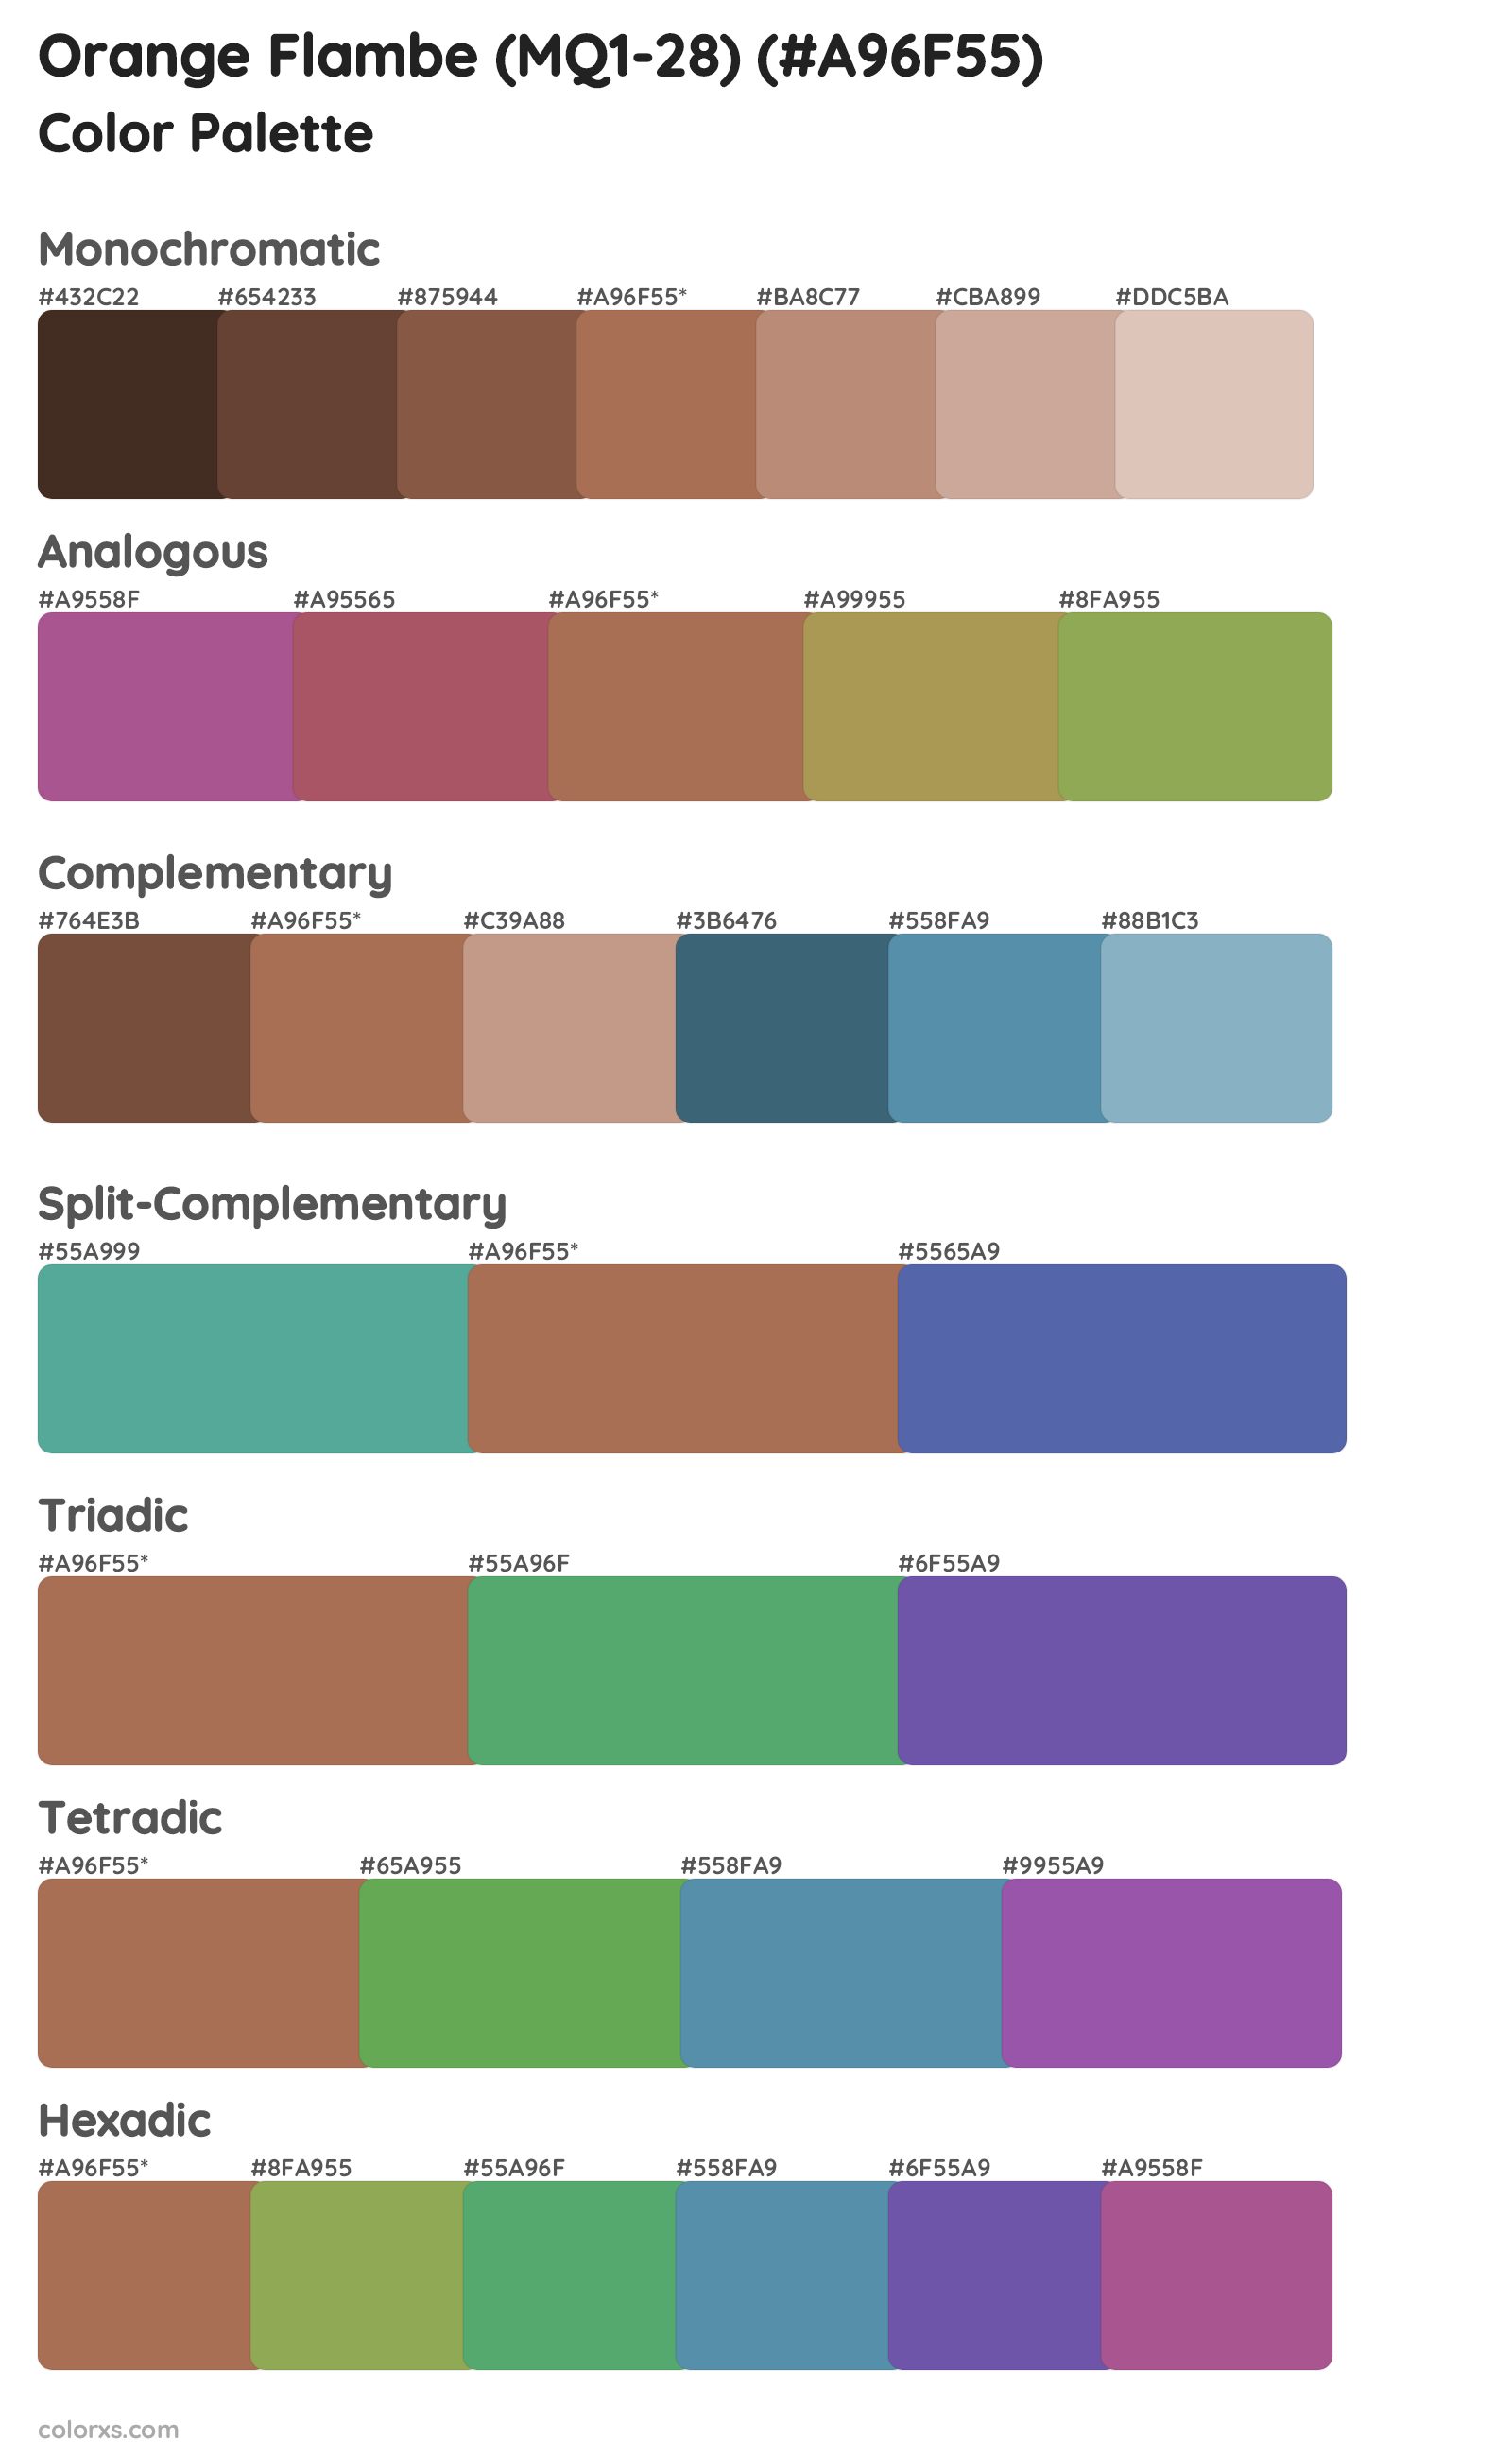 Orange Flambe (MQ1-28) Color Scheme Palettes